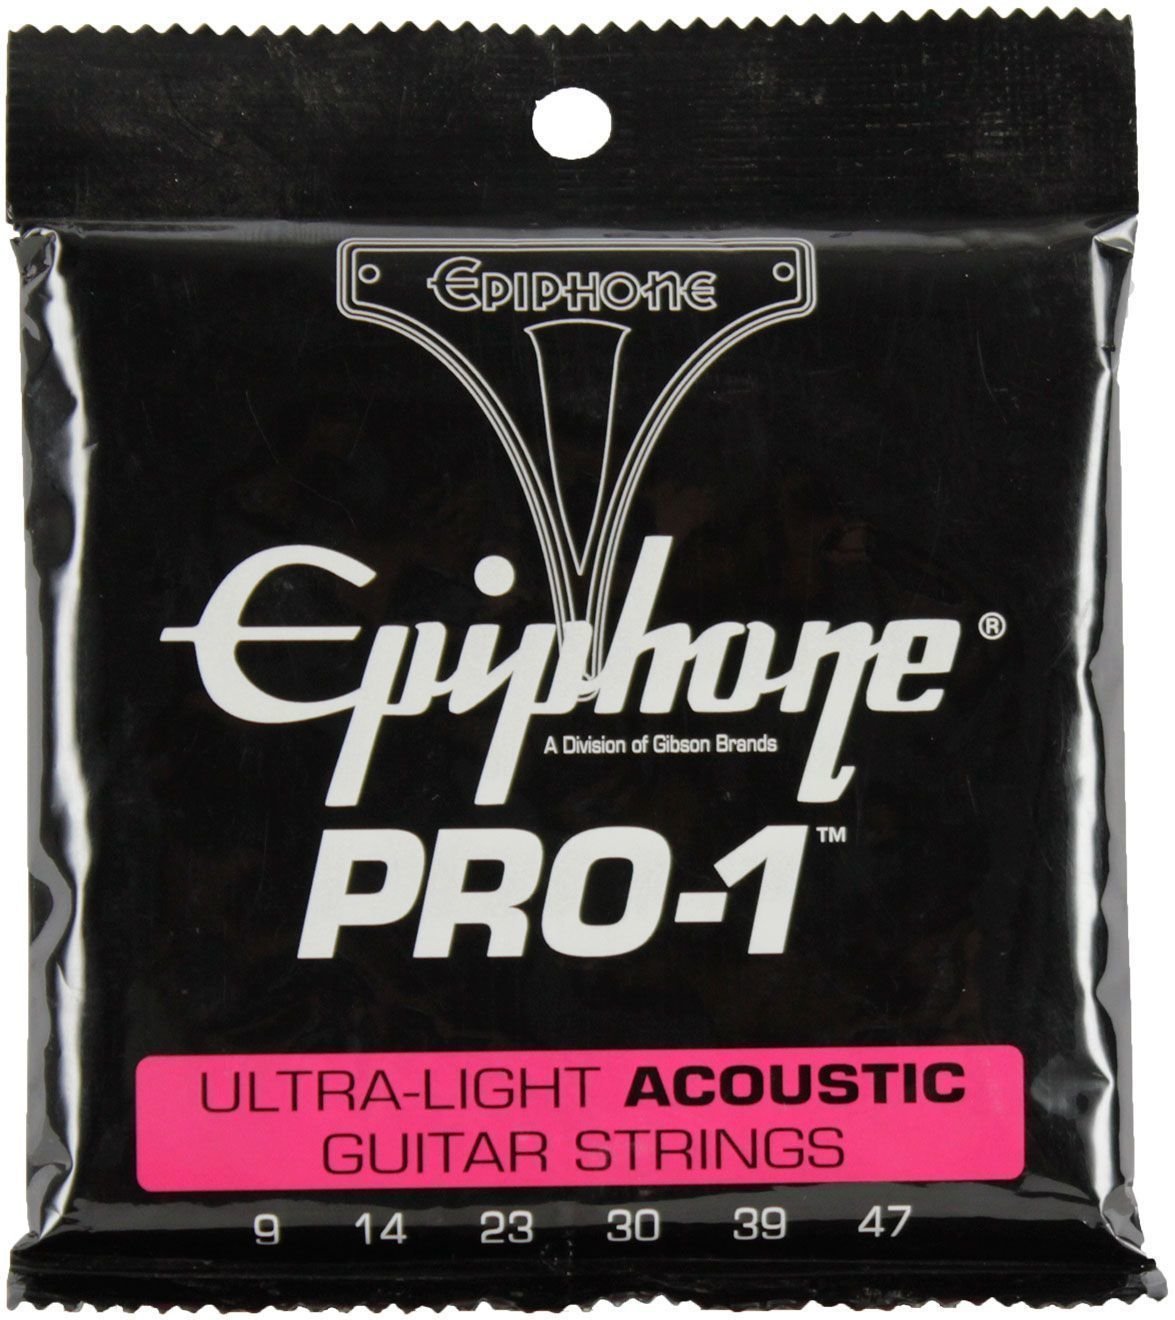 Guitar strings Epiphone Pro-1 Ultra-Light Acoustic Strings